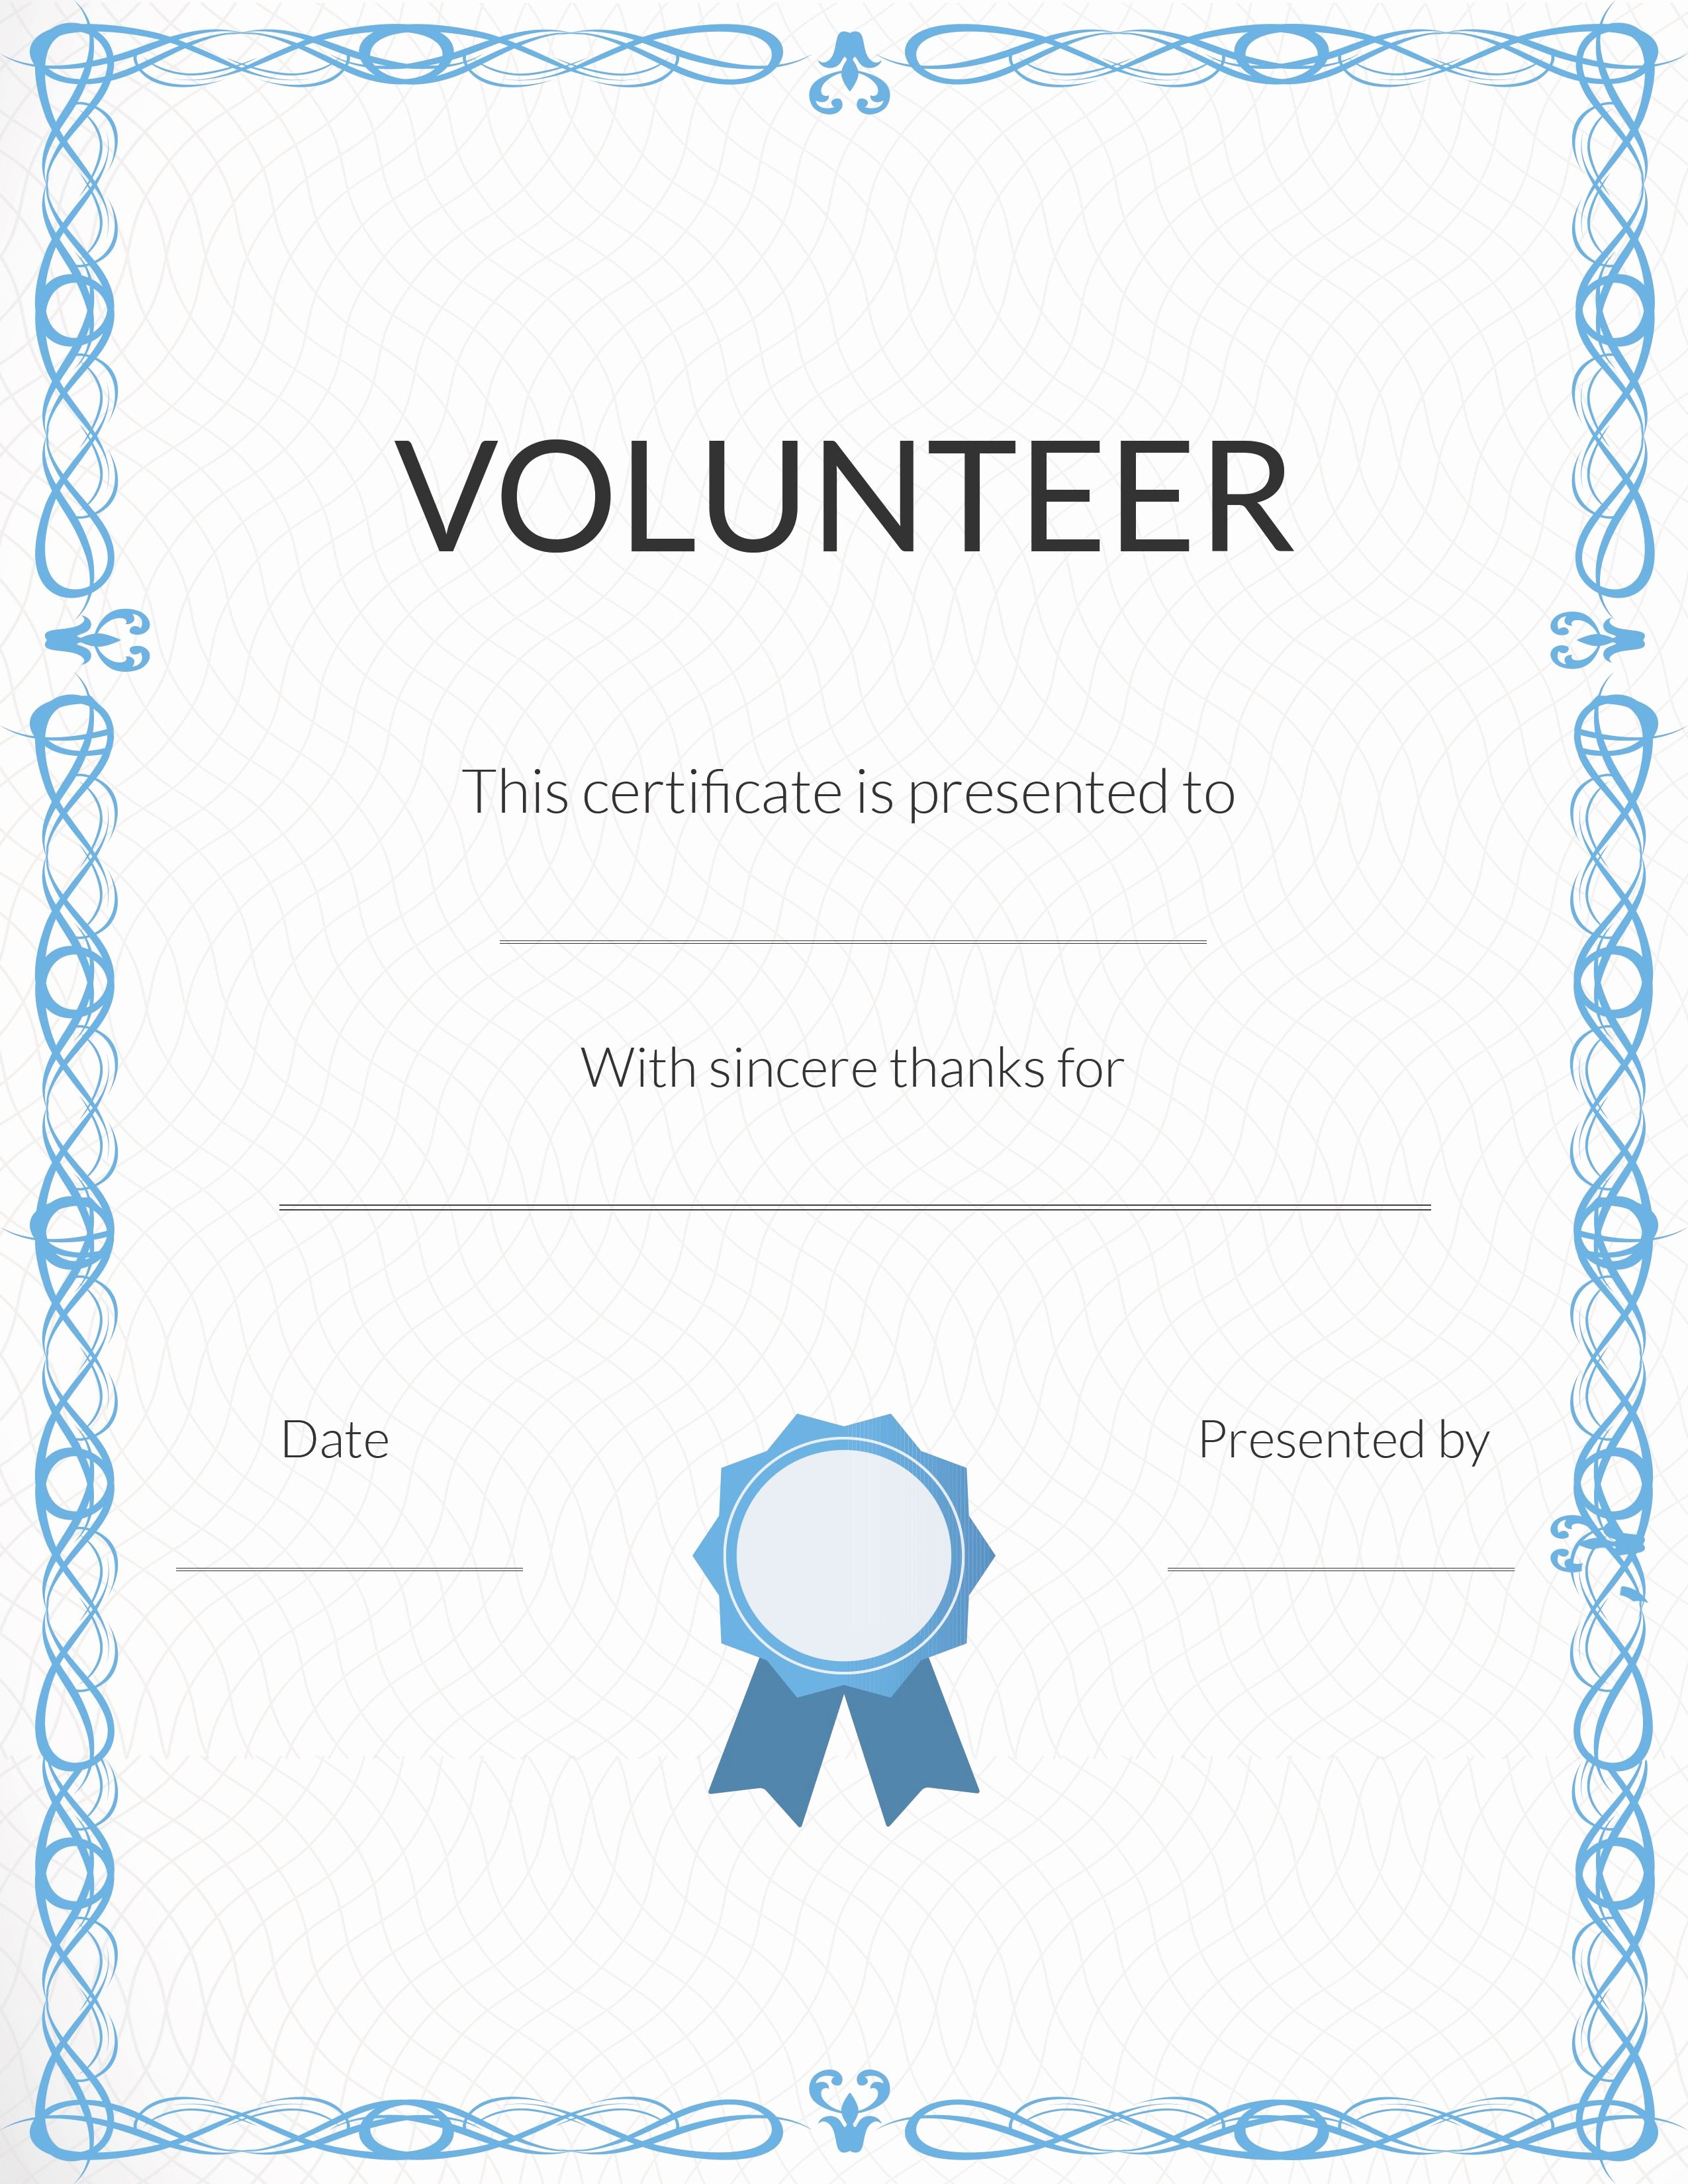 Volunteer Appreciation Certificate Template Fresh Certificate Template Volunteer Appreciation